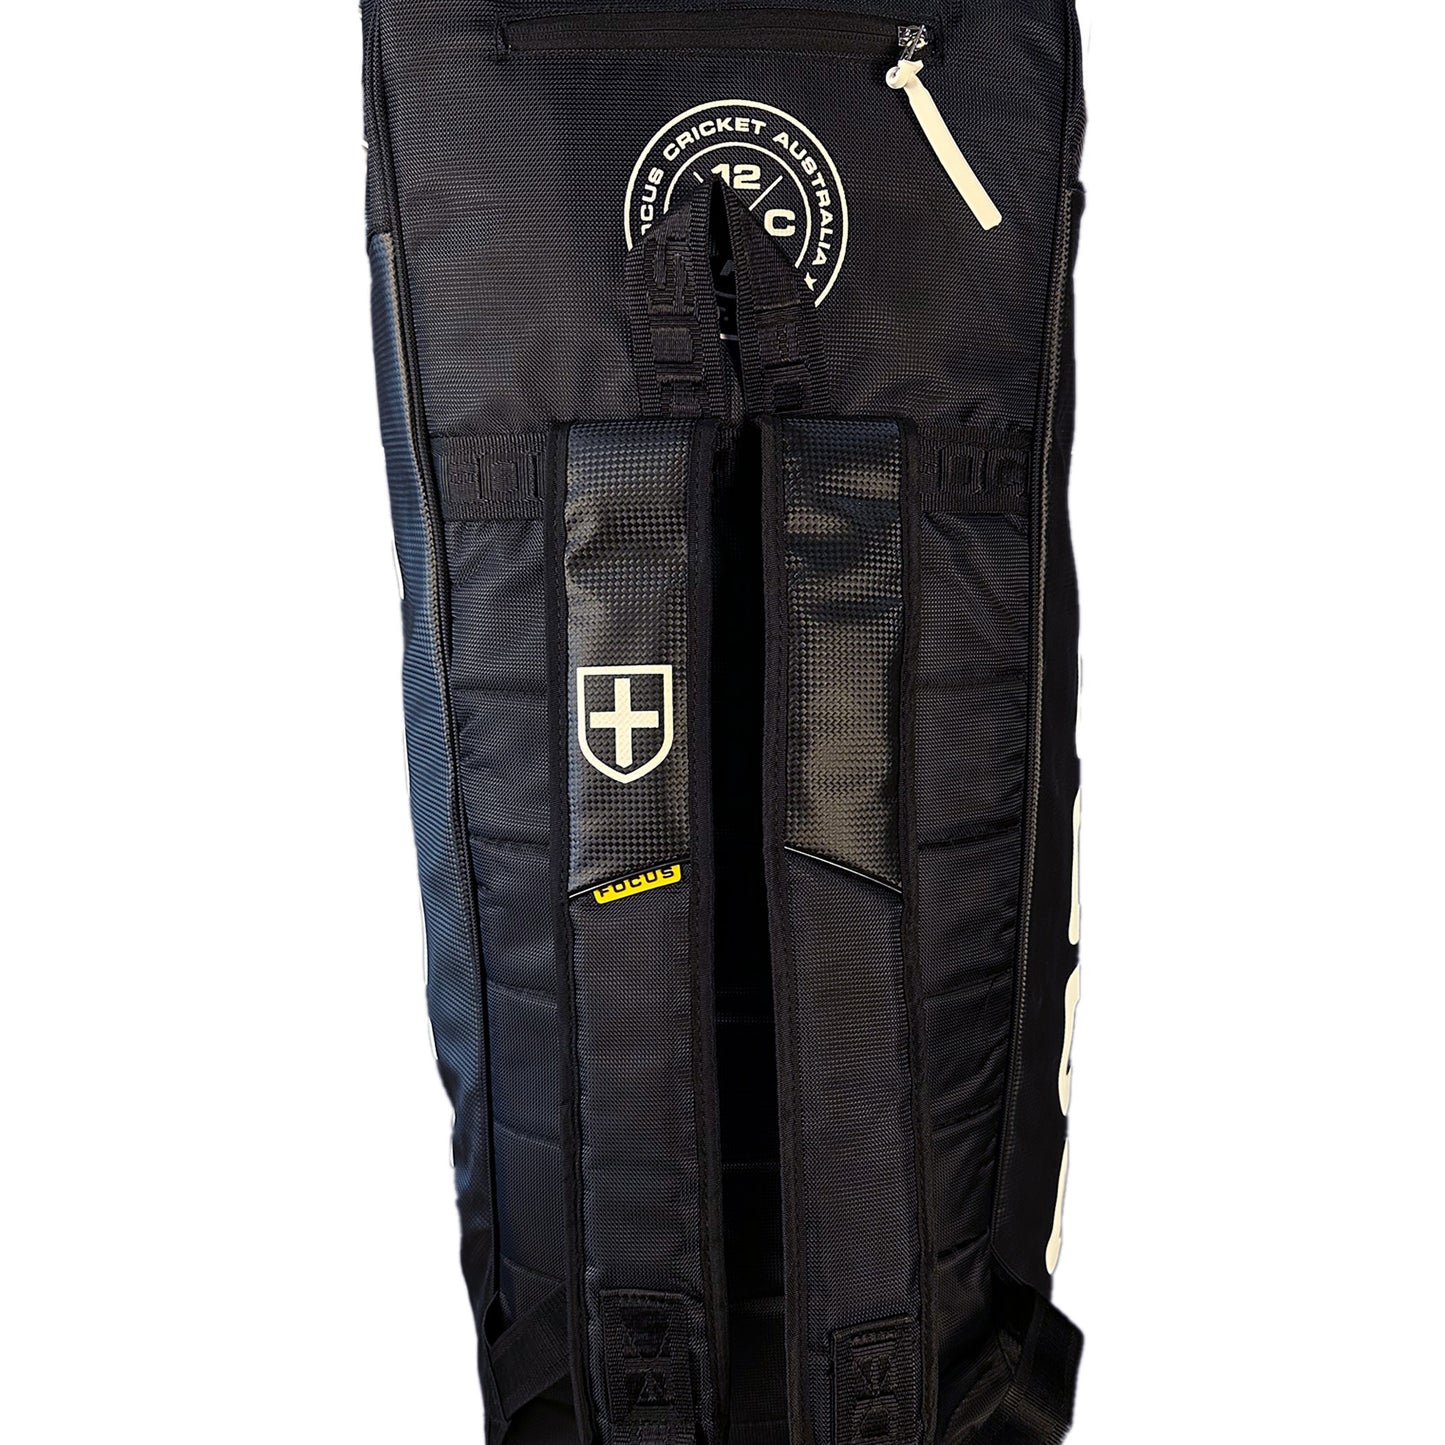 SELECT Edition Duffle Wheelie Cricket Bag